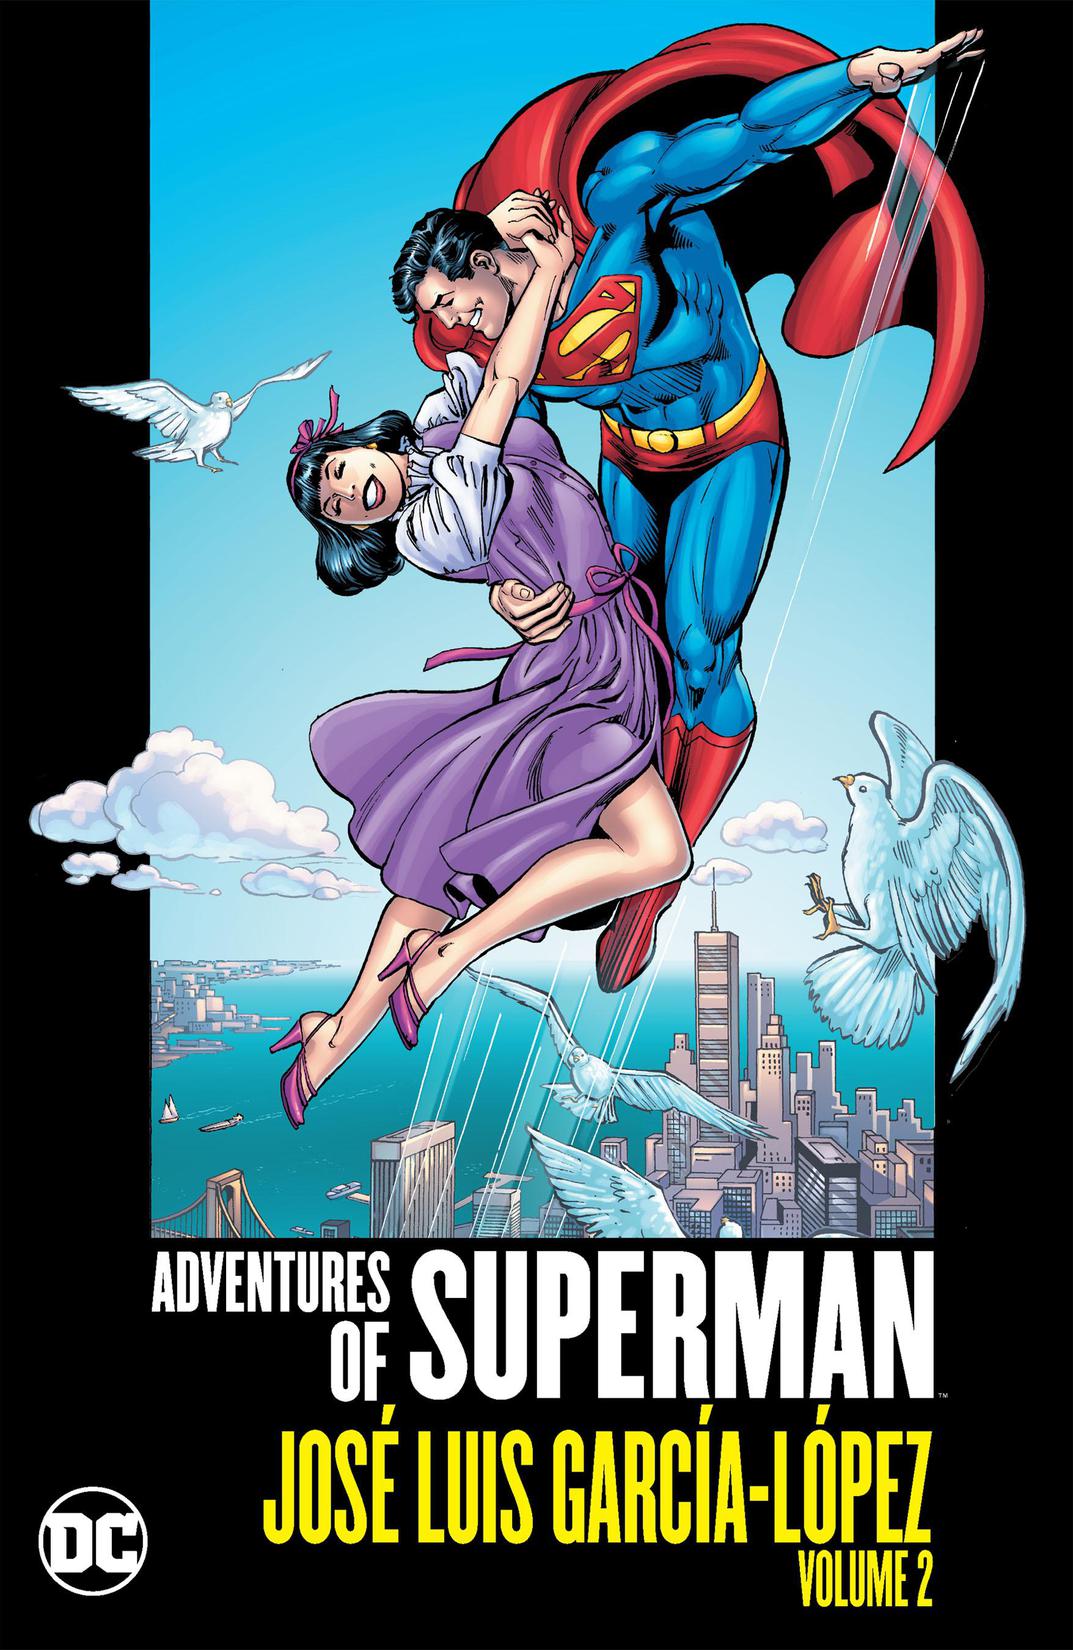 Adventures of Superman: Jose Luis Garcia-Lopez Vol. 2 preview images